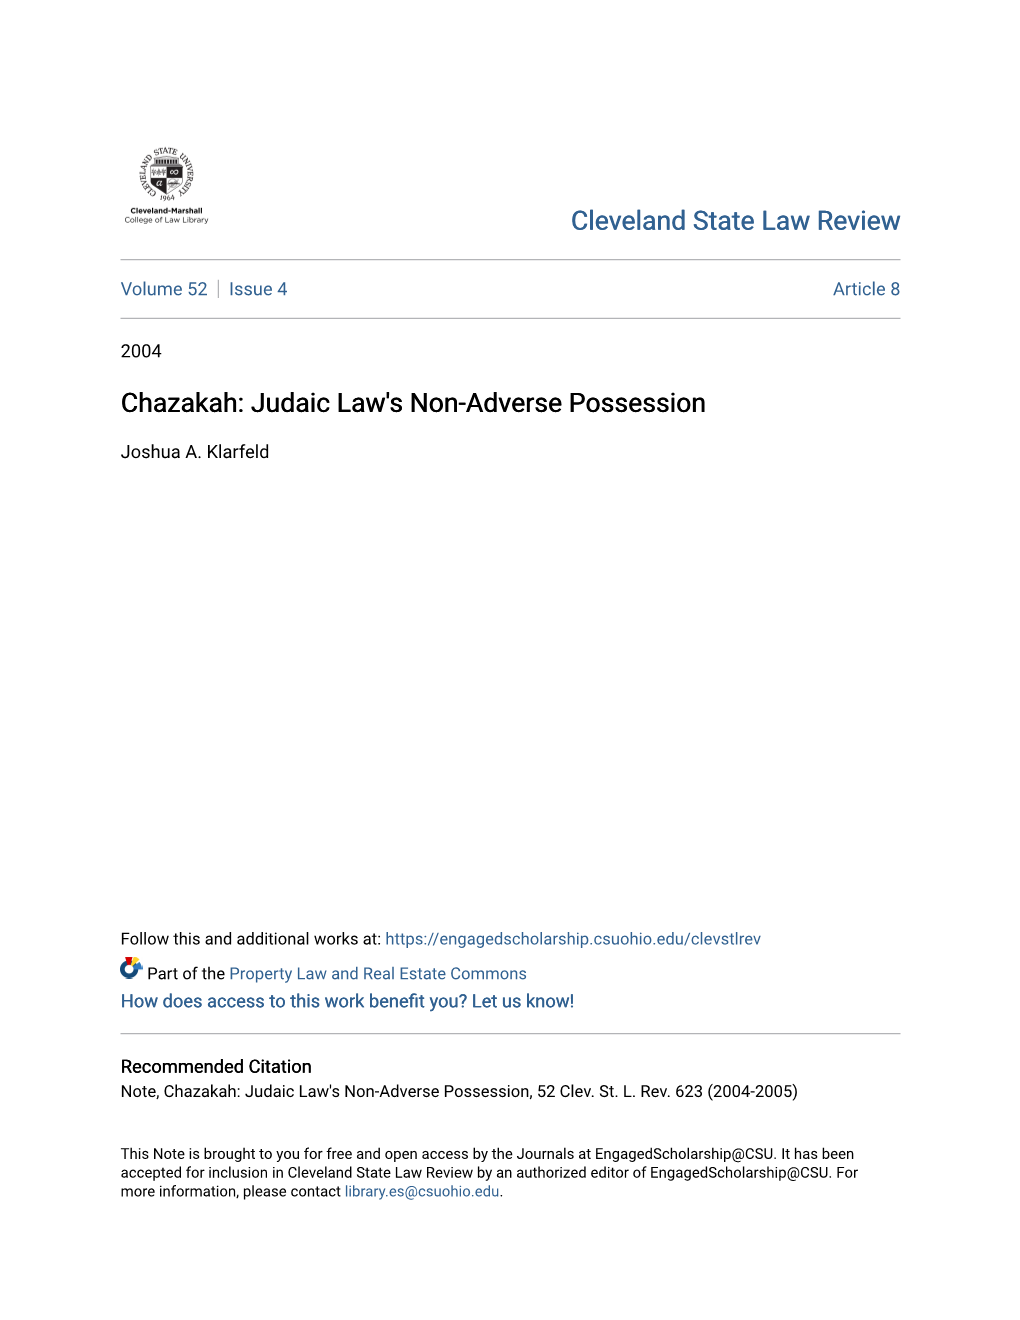 Chazakah: Judaic Law's Non-Adverse Possession